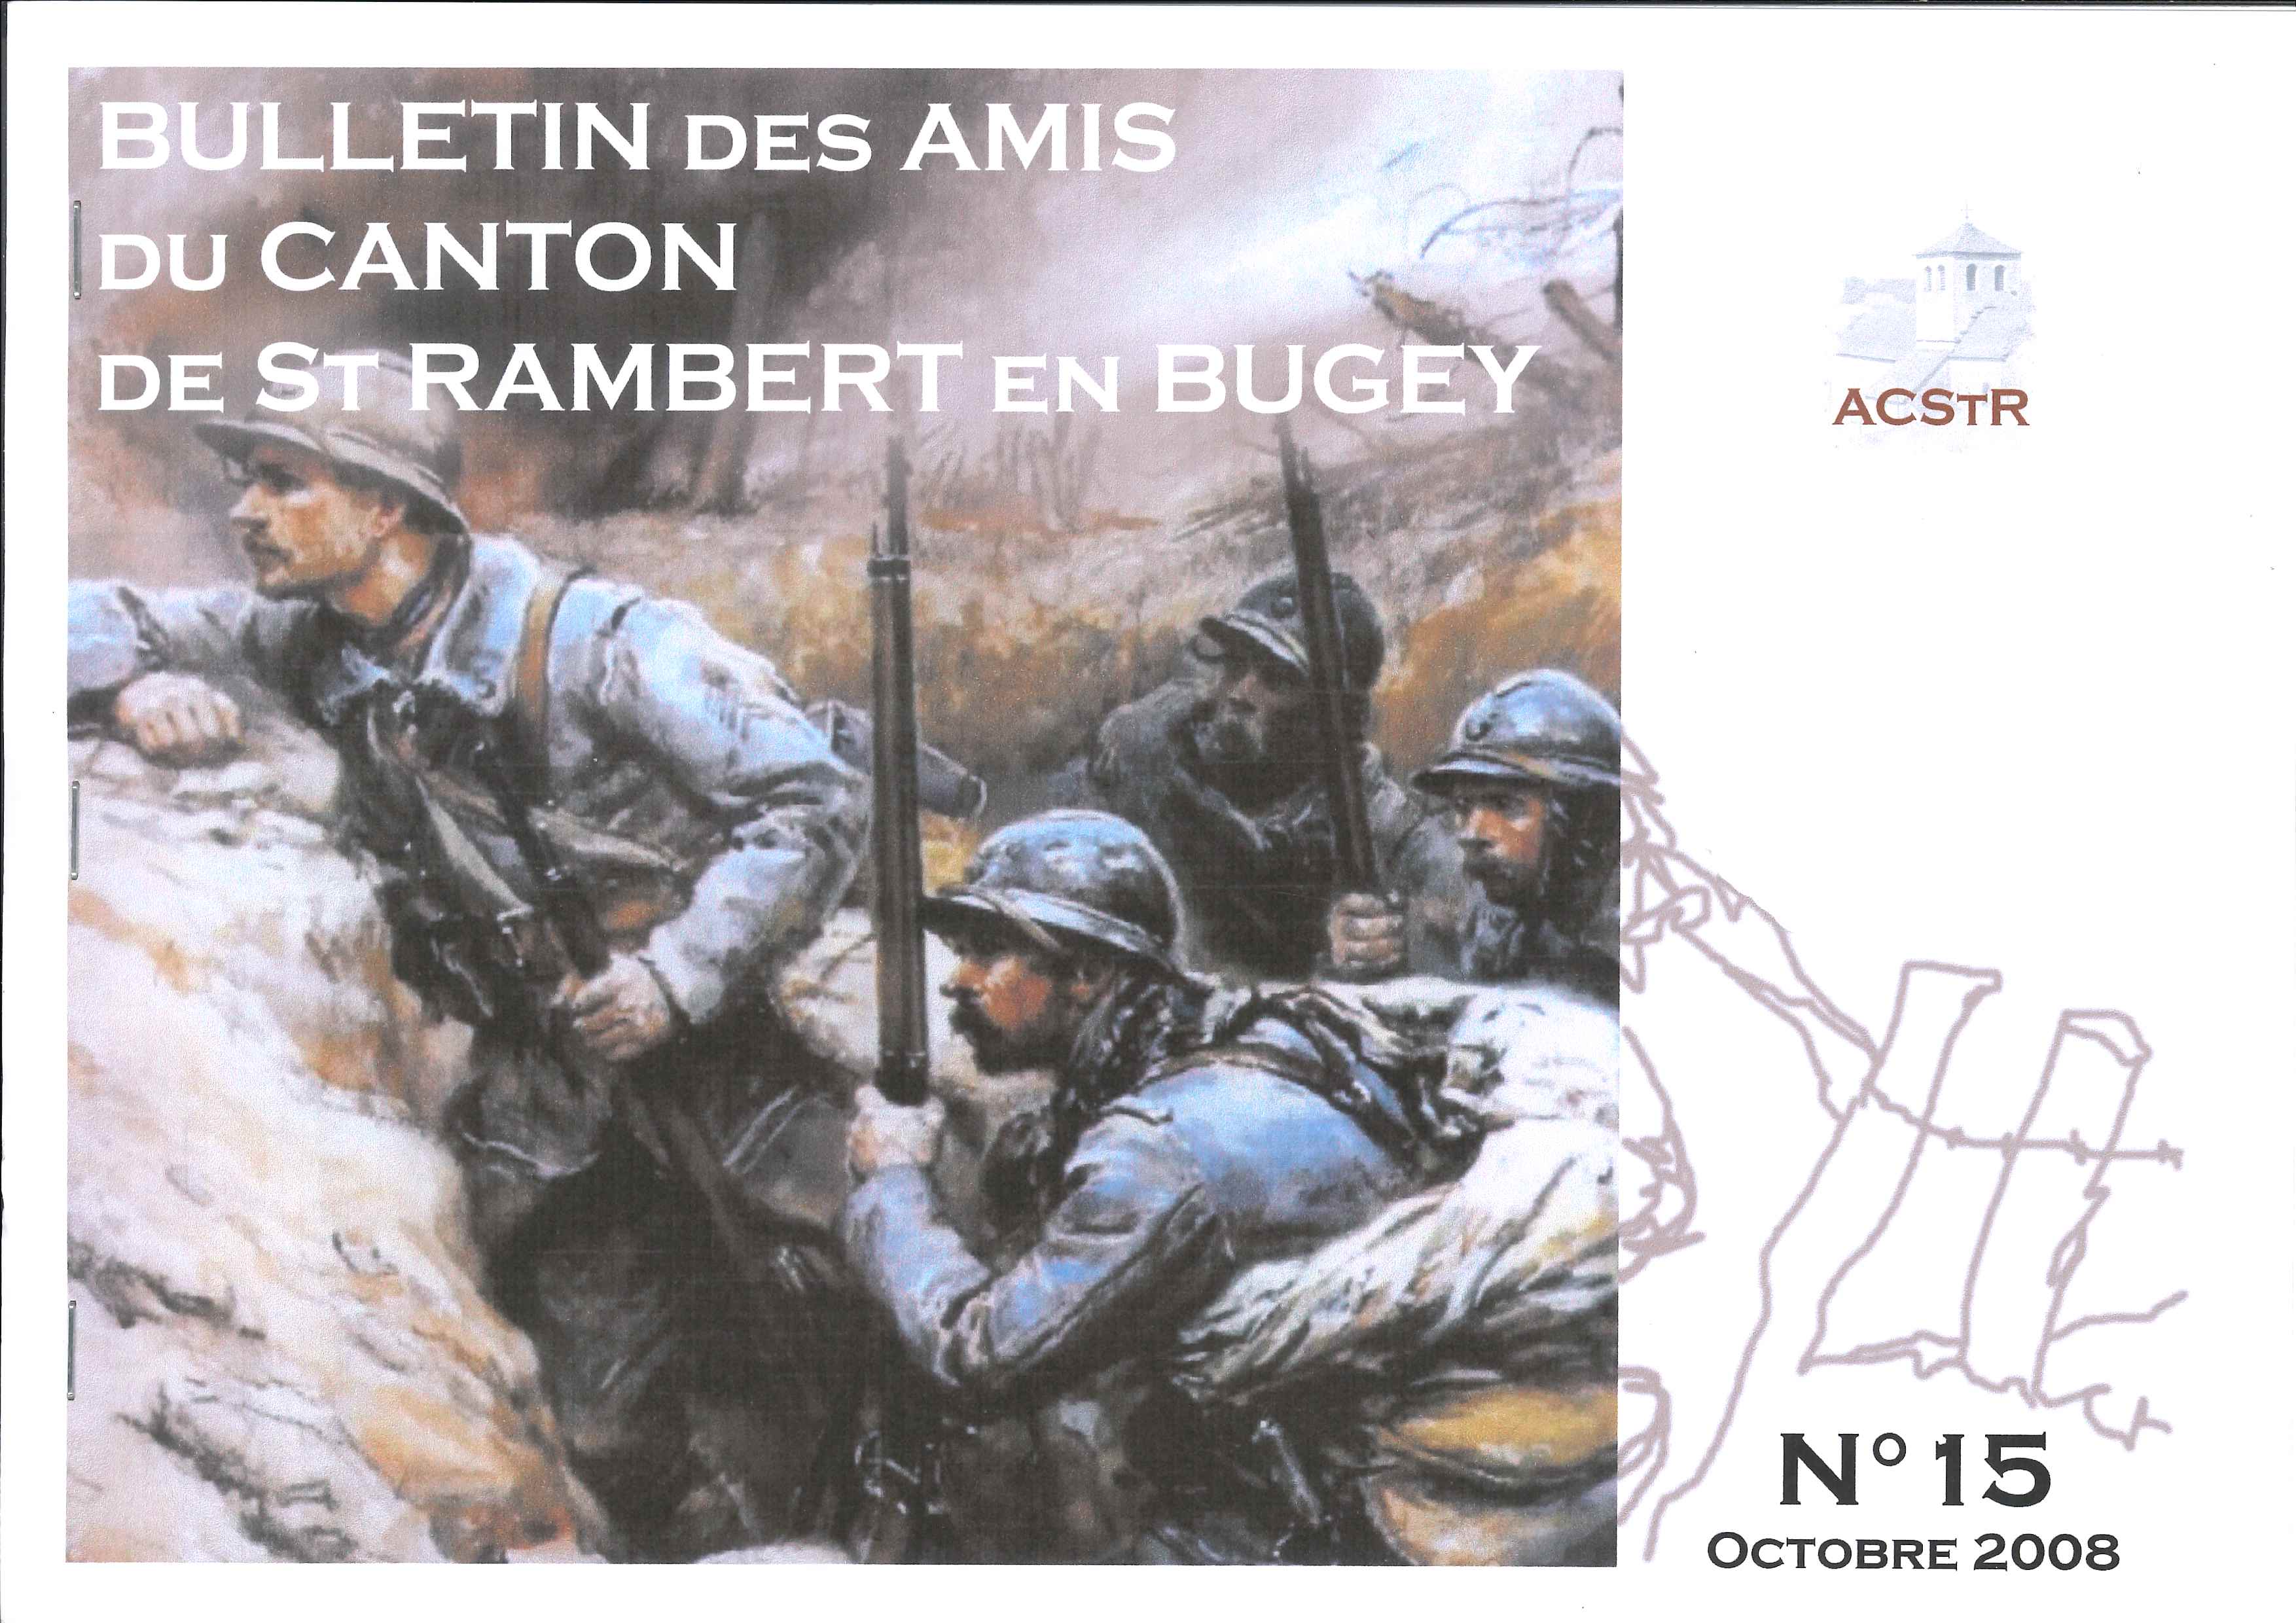 Bulletin des amis du canton de Saint Rambert en Bugey n15 